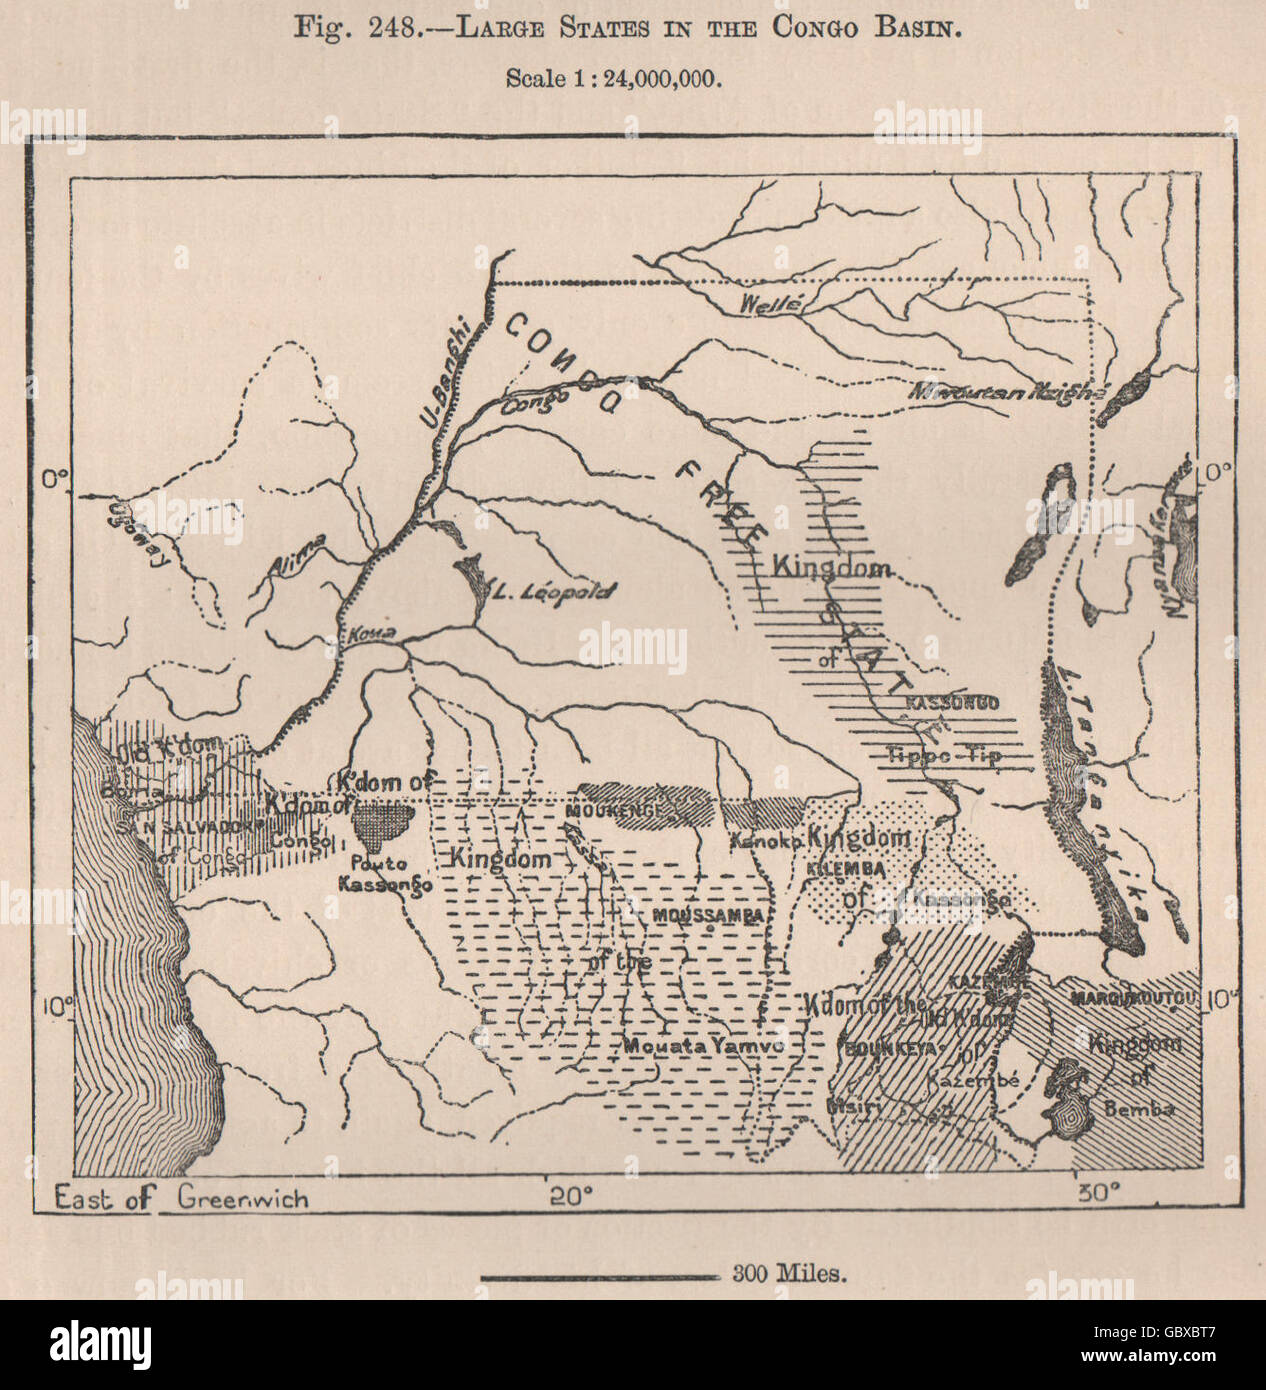 Großen Staaten im Kongobecken. Kongo-Freistaat. Angola. DR Congo, 1885-Karte Stockfoto